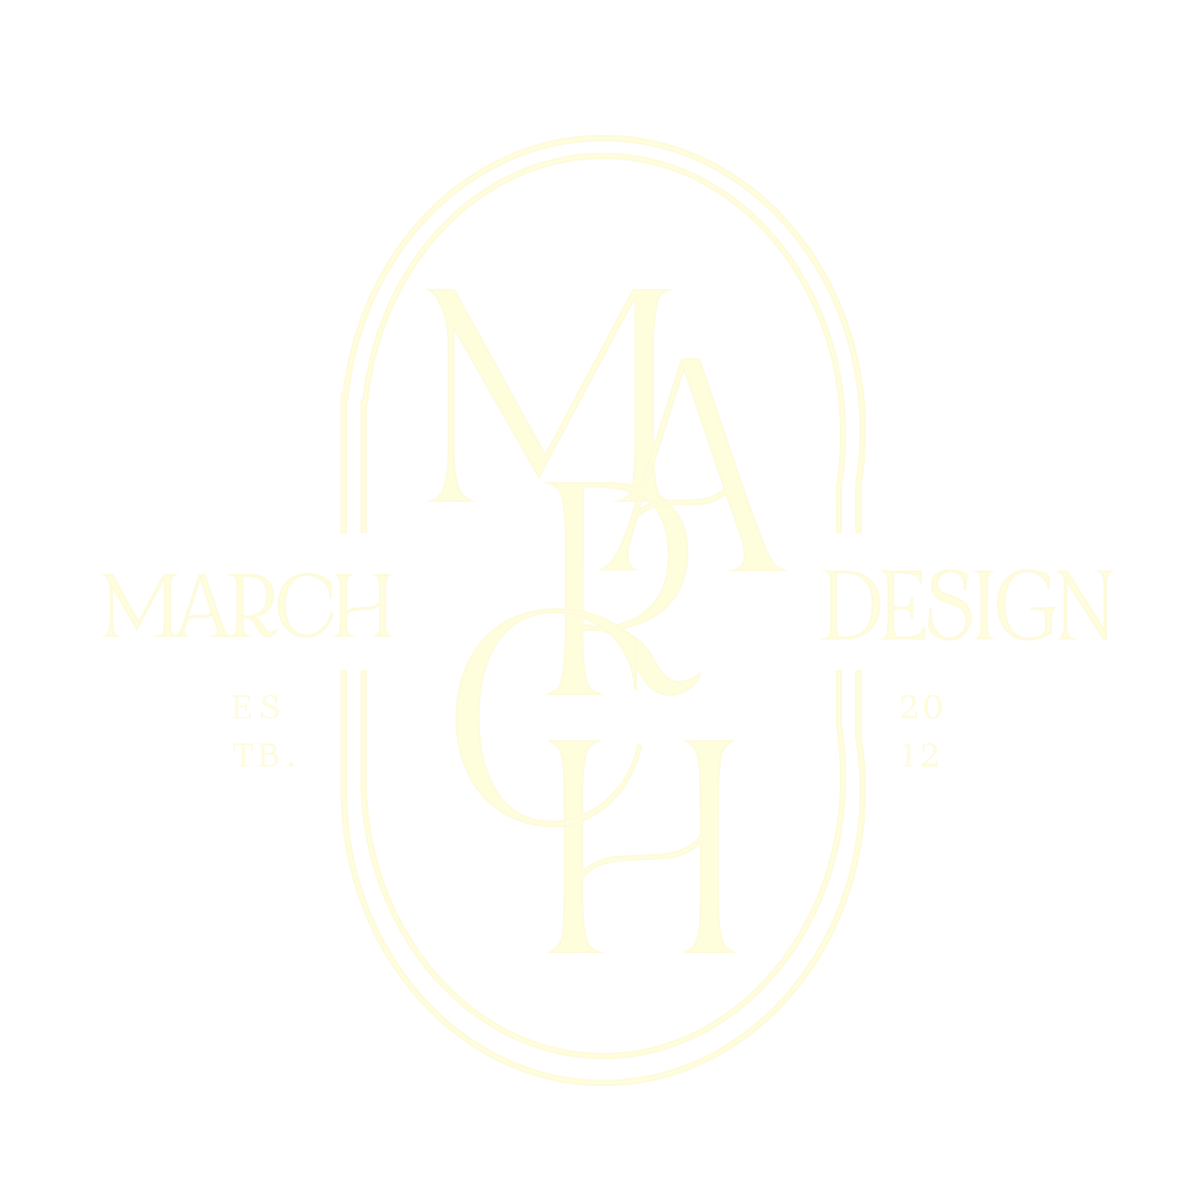 MARCH DESIGN (Copy)